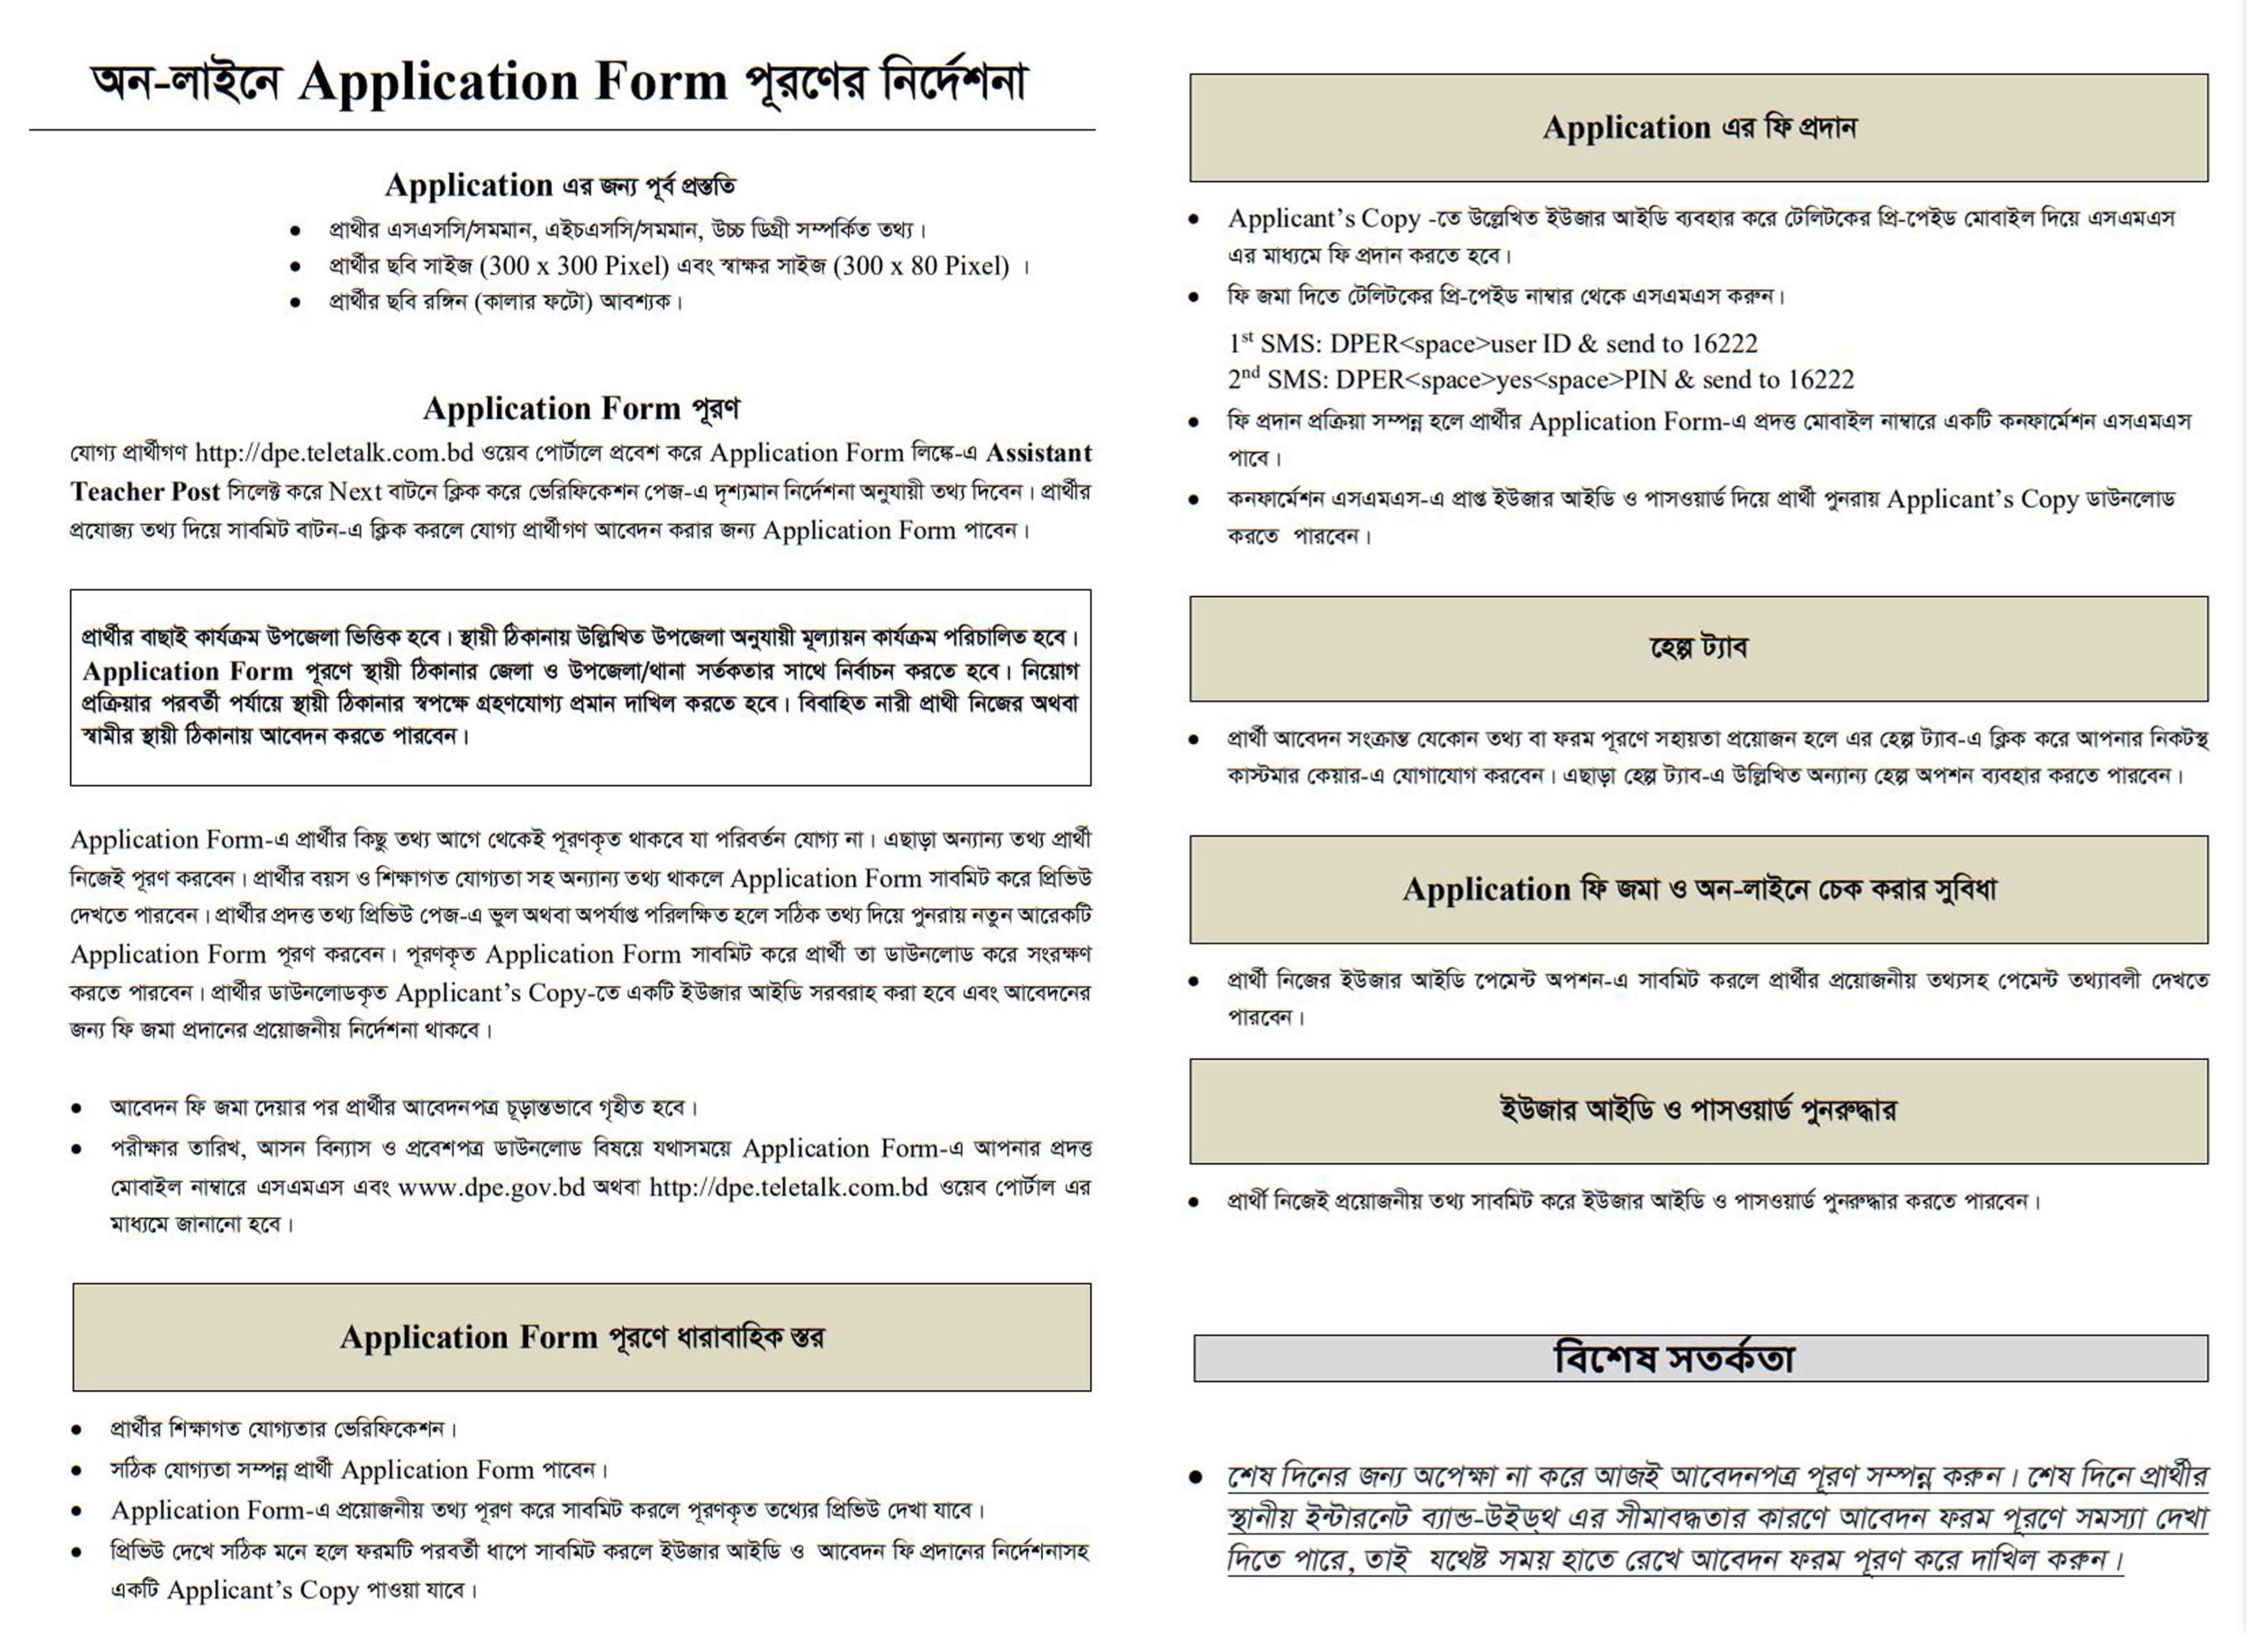 Primary Assistant Teacher Job Application Procedure Guide